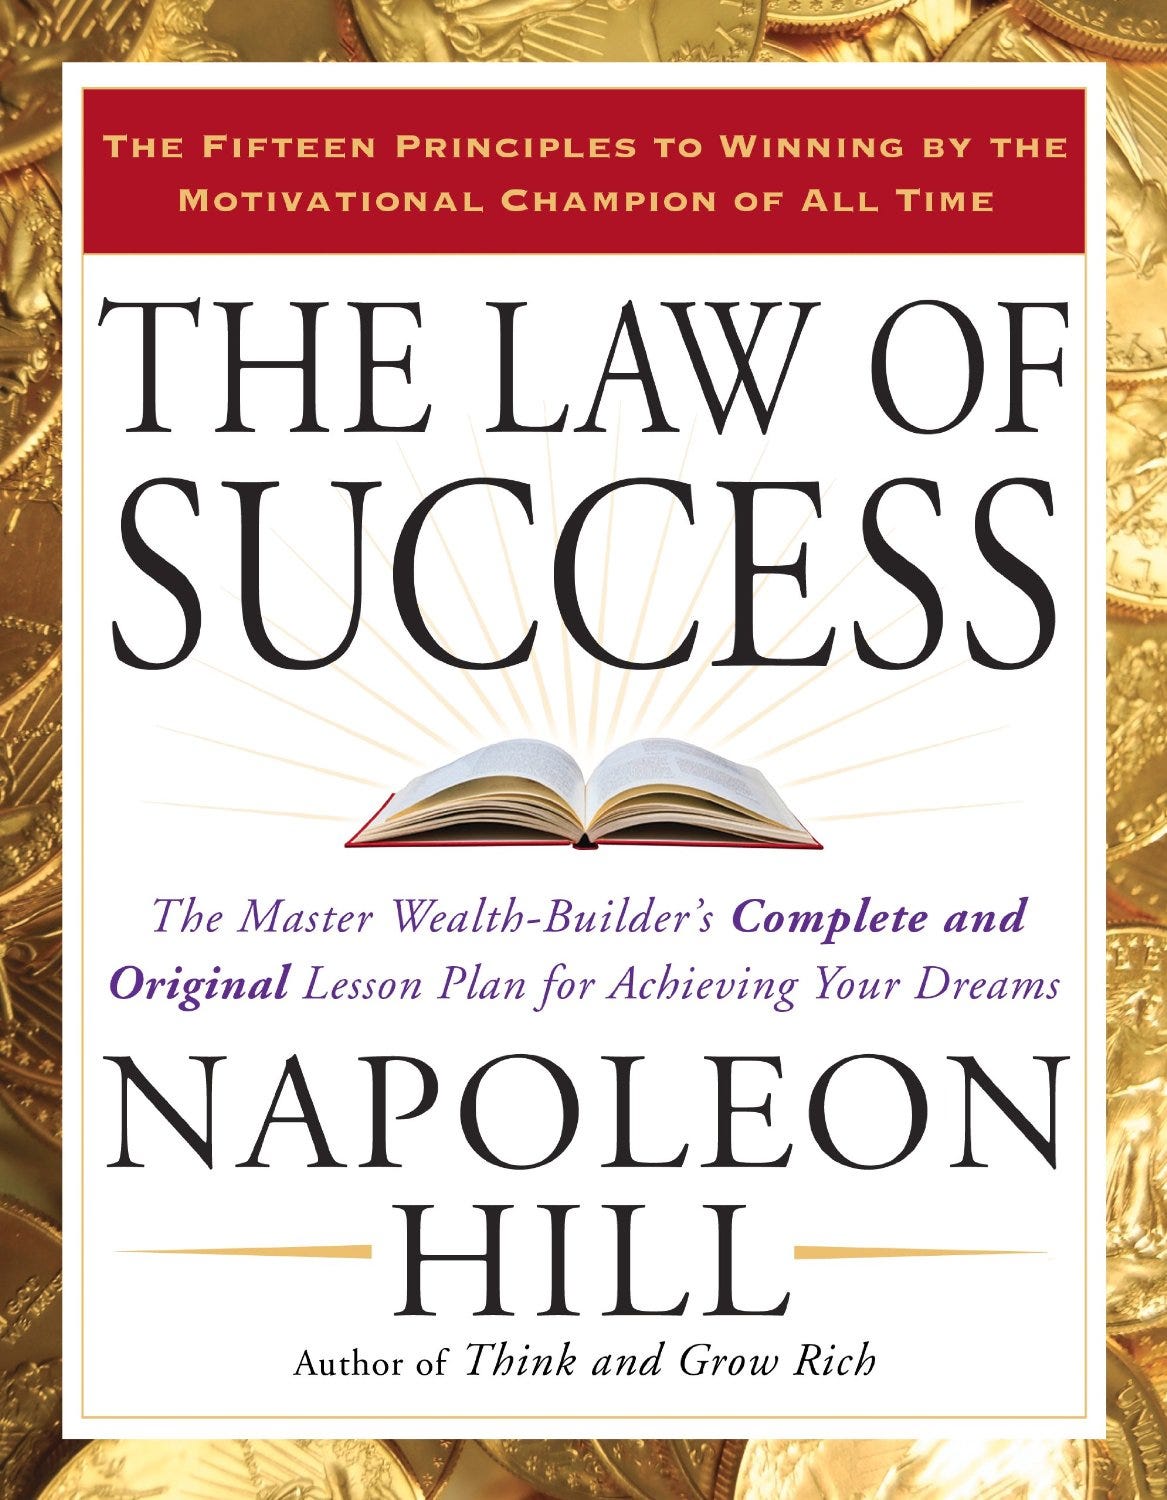 The Principles of Napoleon Hill